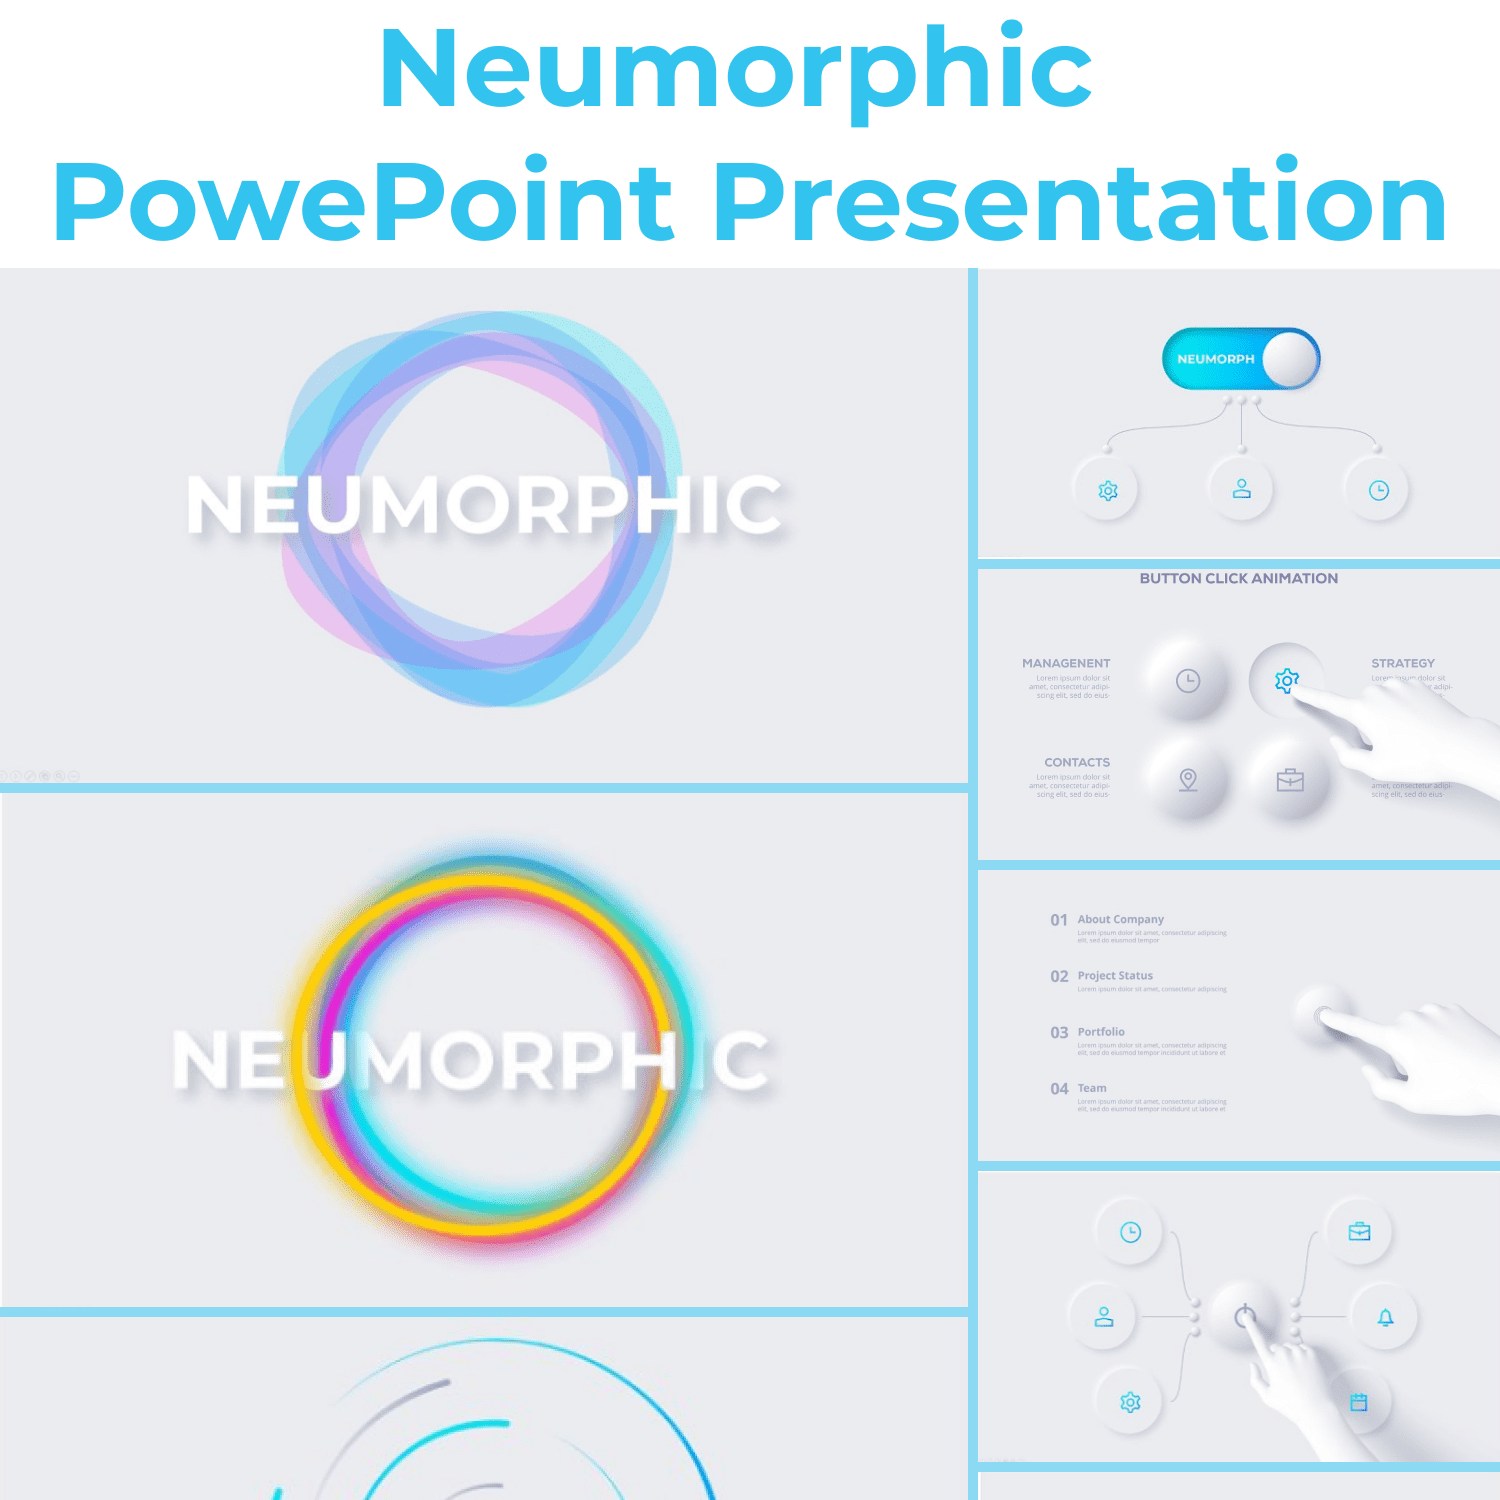 Neumorphic PowePoint Presentation cover image.